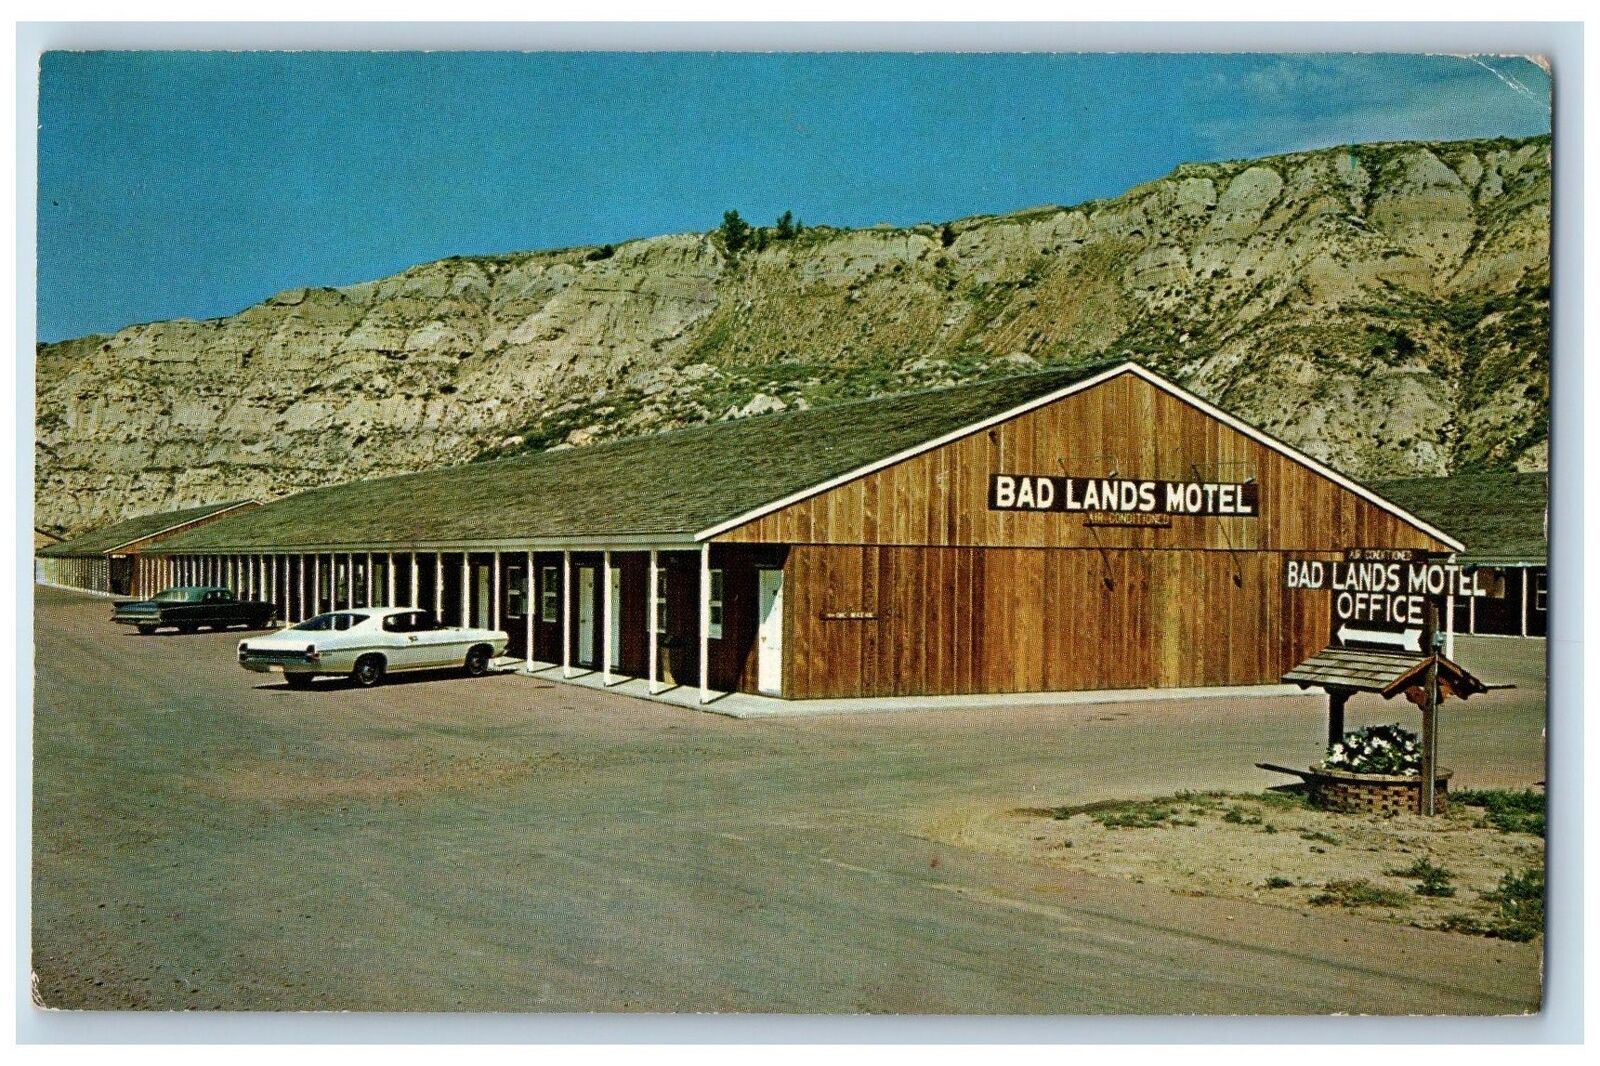 Medora North Dakota ND Postcard Band Land Motels And Office Exterior 1972 Cars